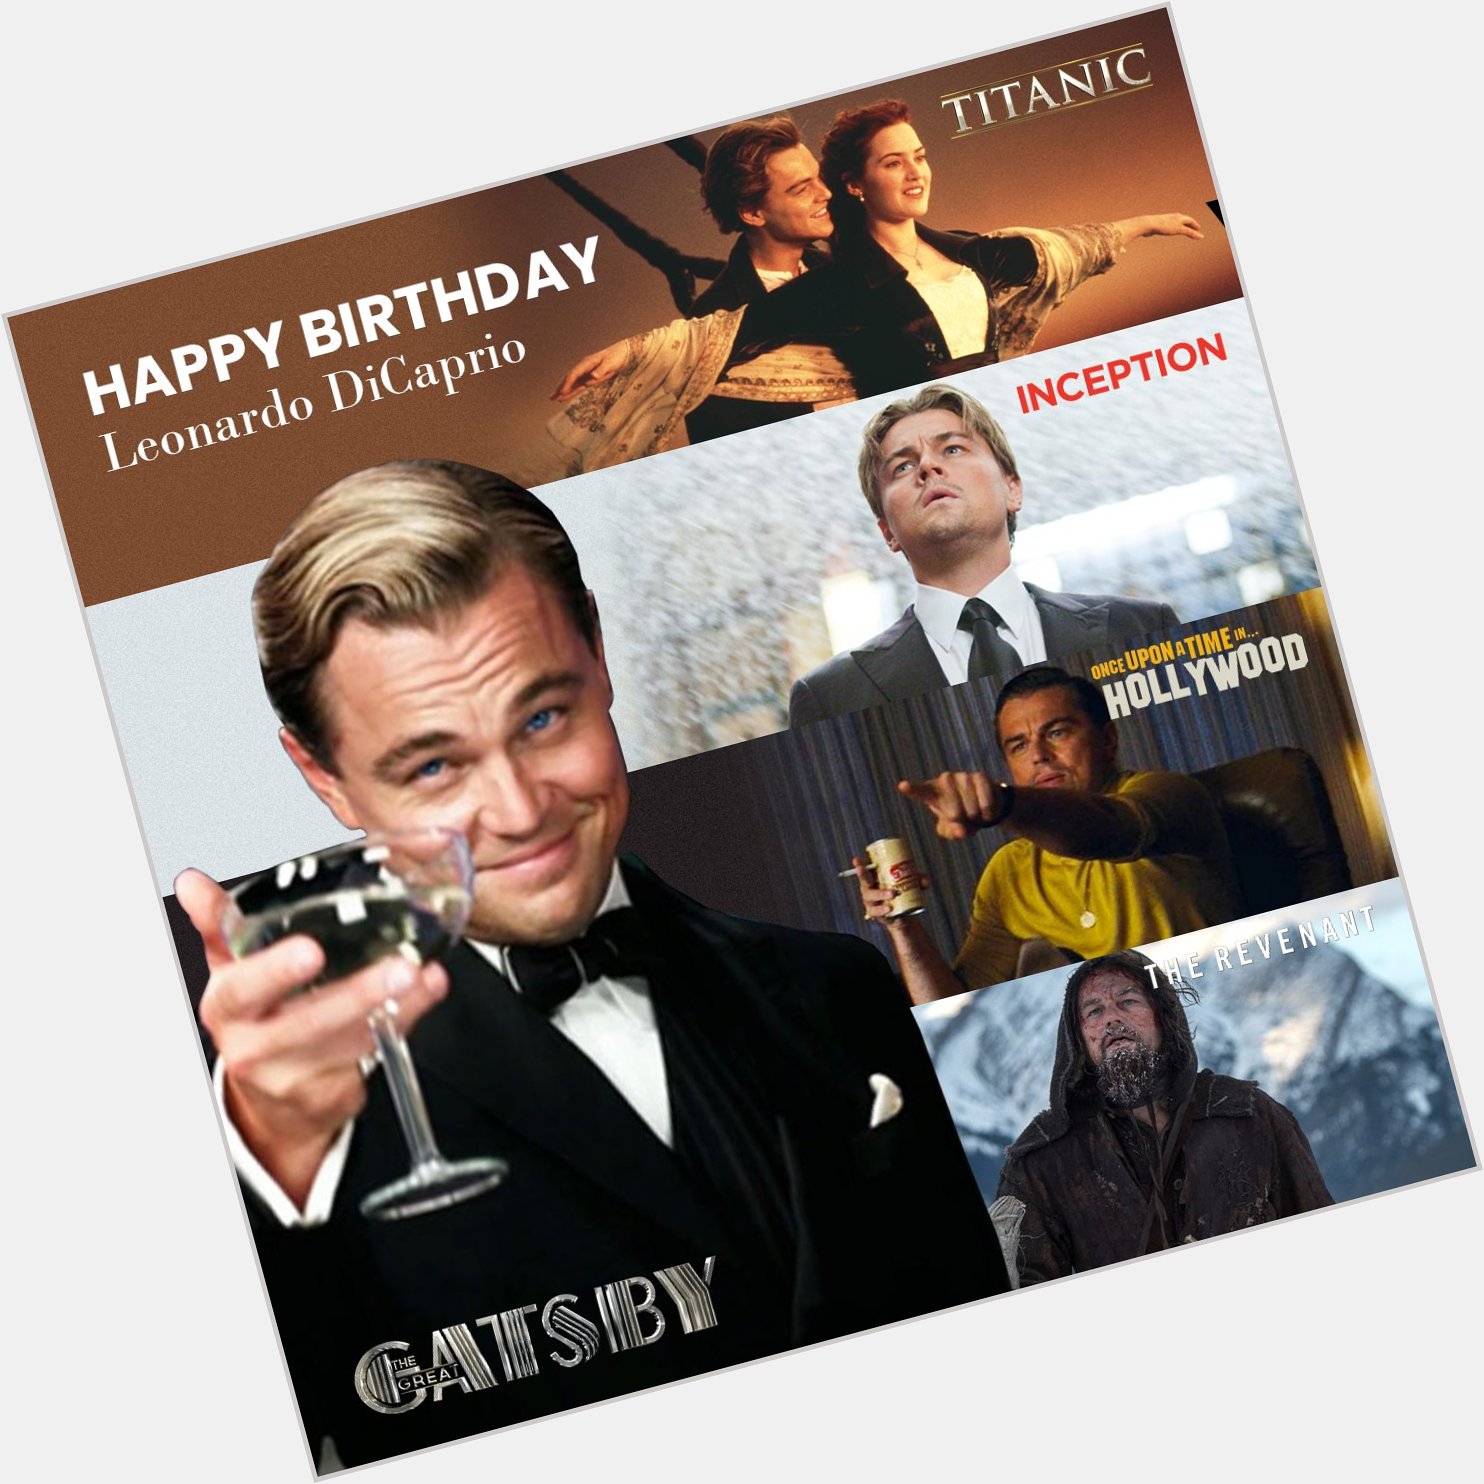 Happy Birthday Leonardo DiCaprio!! What\s your favorite Leonardo film? 